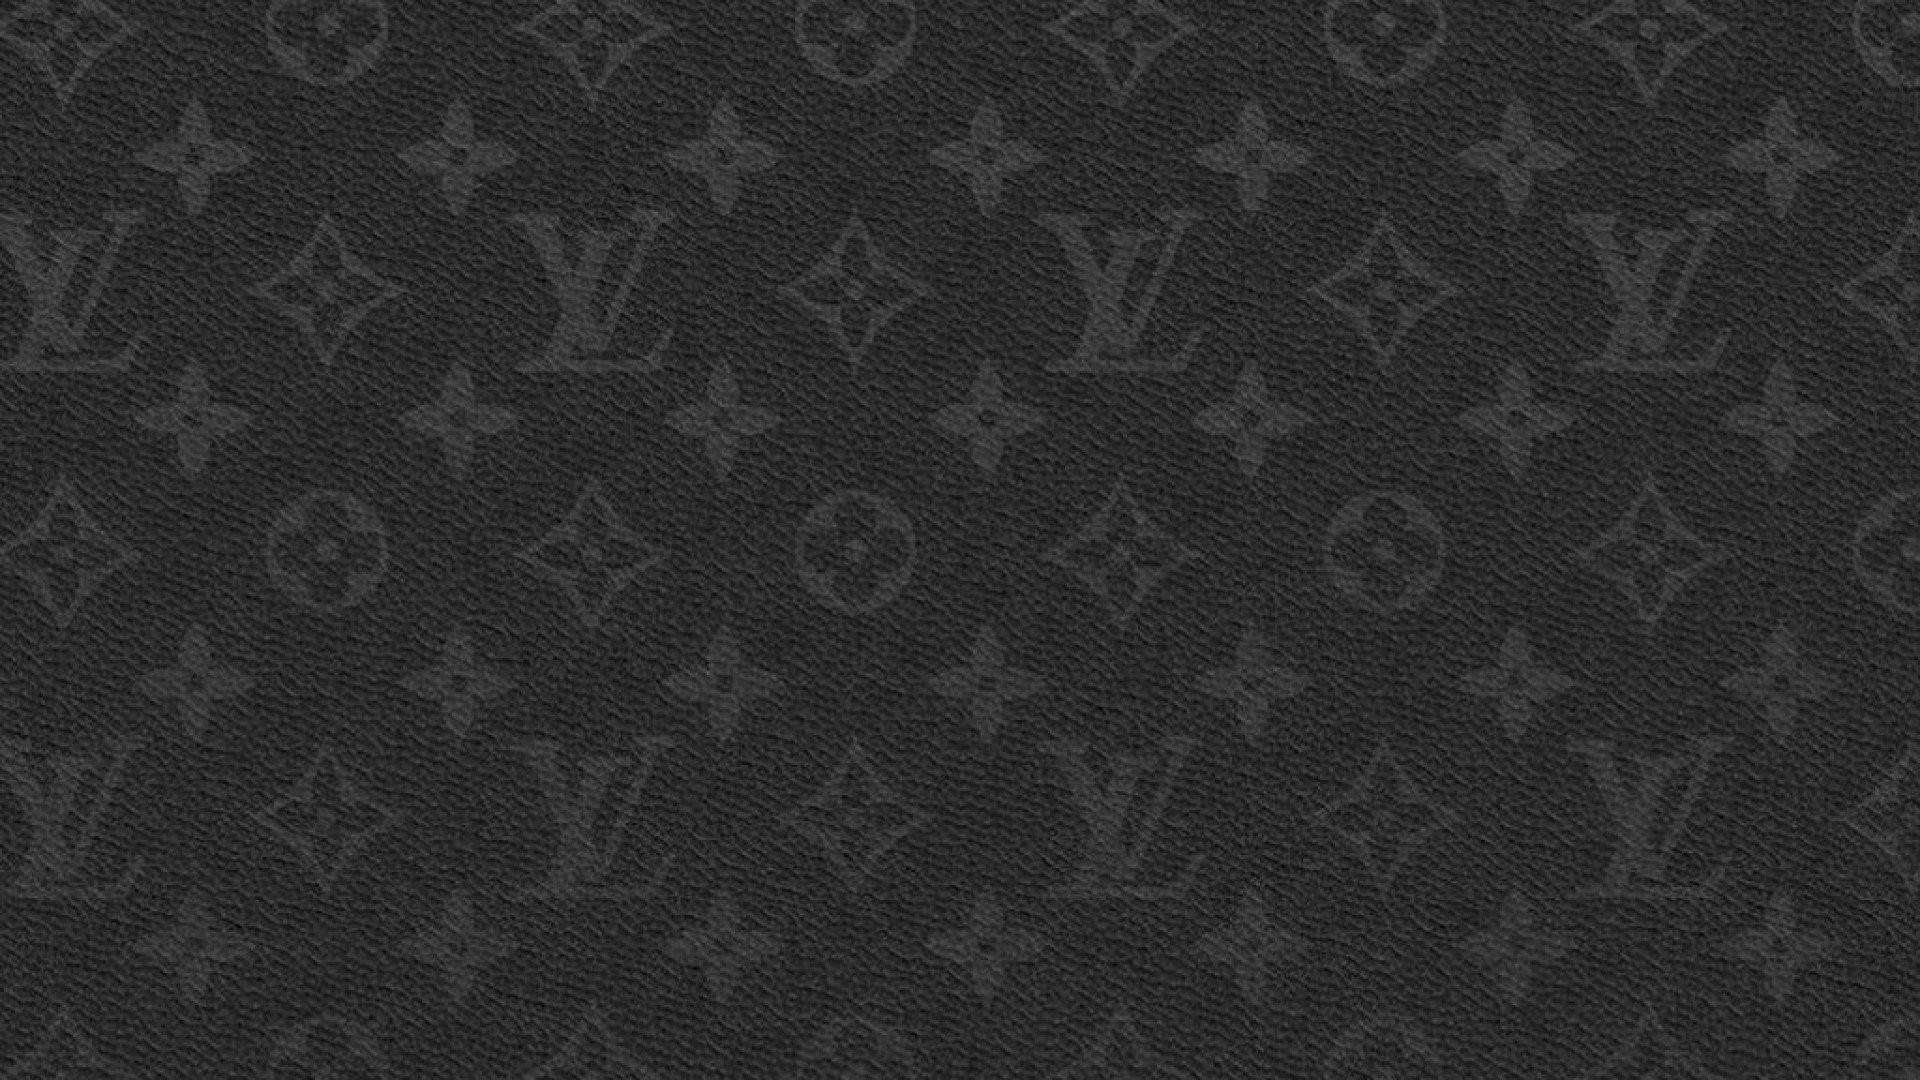 Pink Louis Vuitton In Maroon Background HD Louis Vuitton Wallpapers  HD  Wallpapers  ID 45219